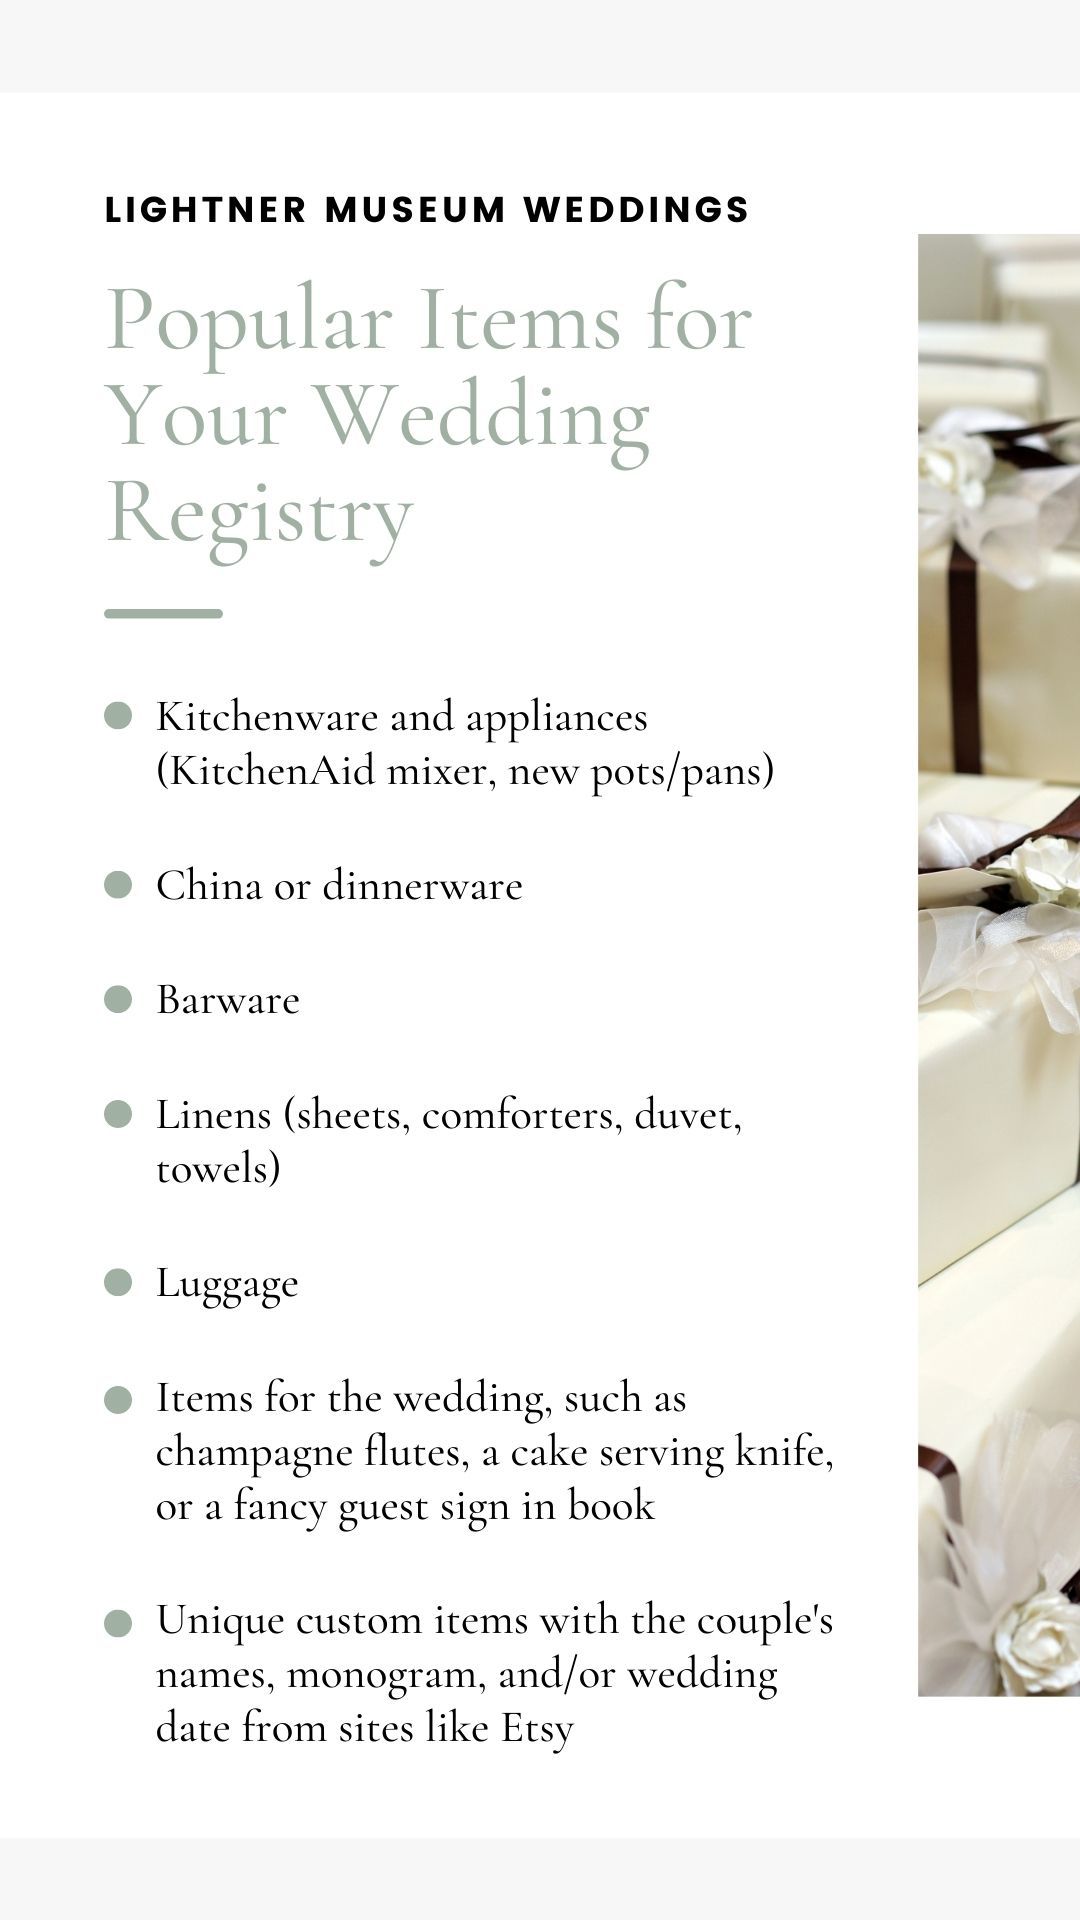 Most Popular Wedding Registry Gifts on